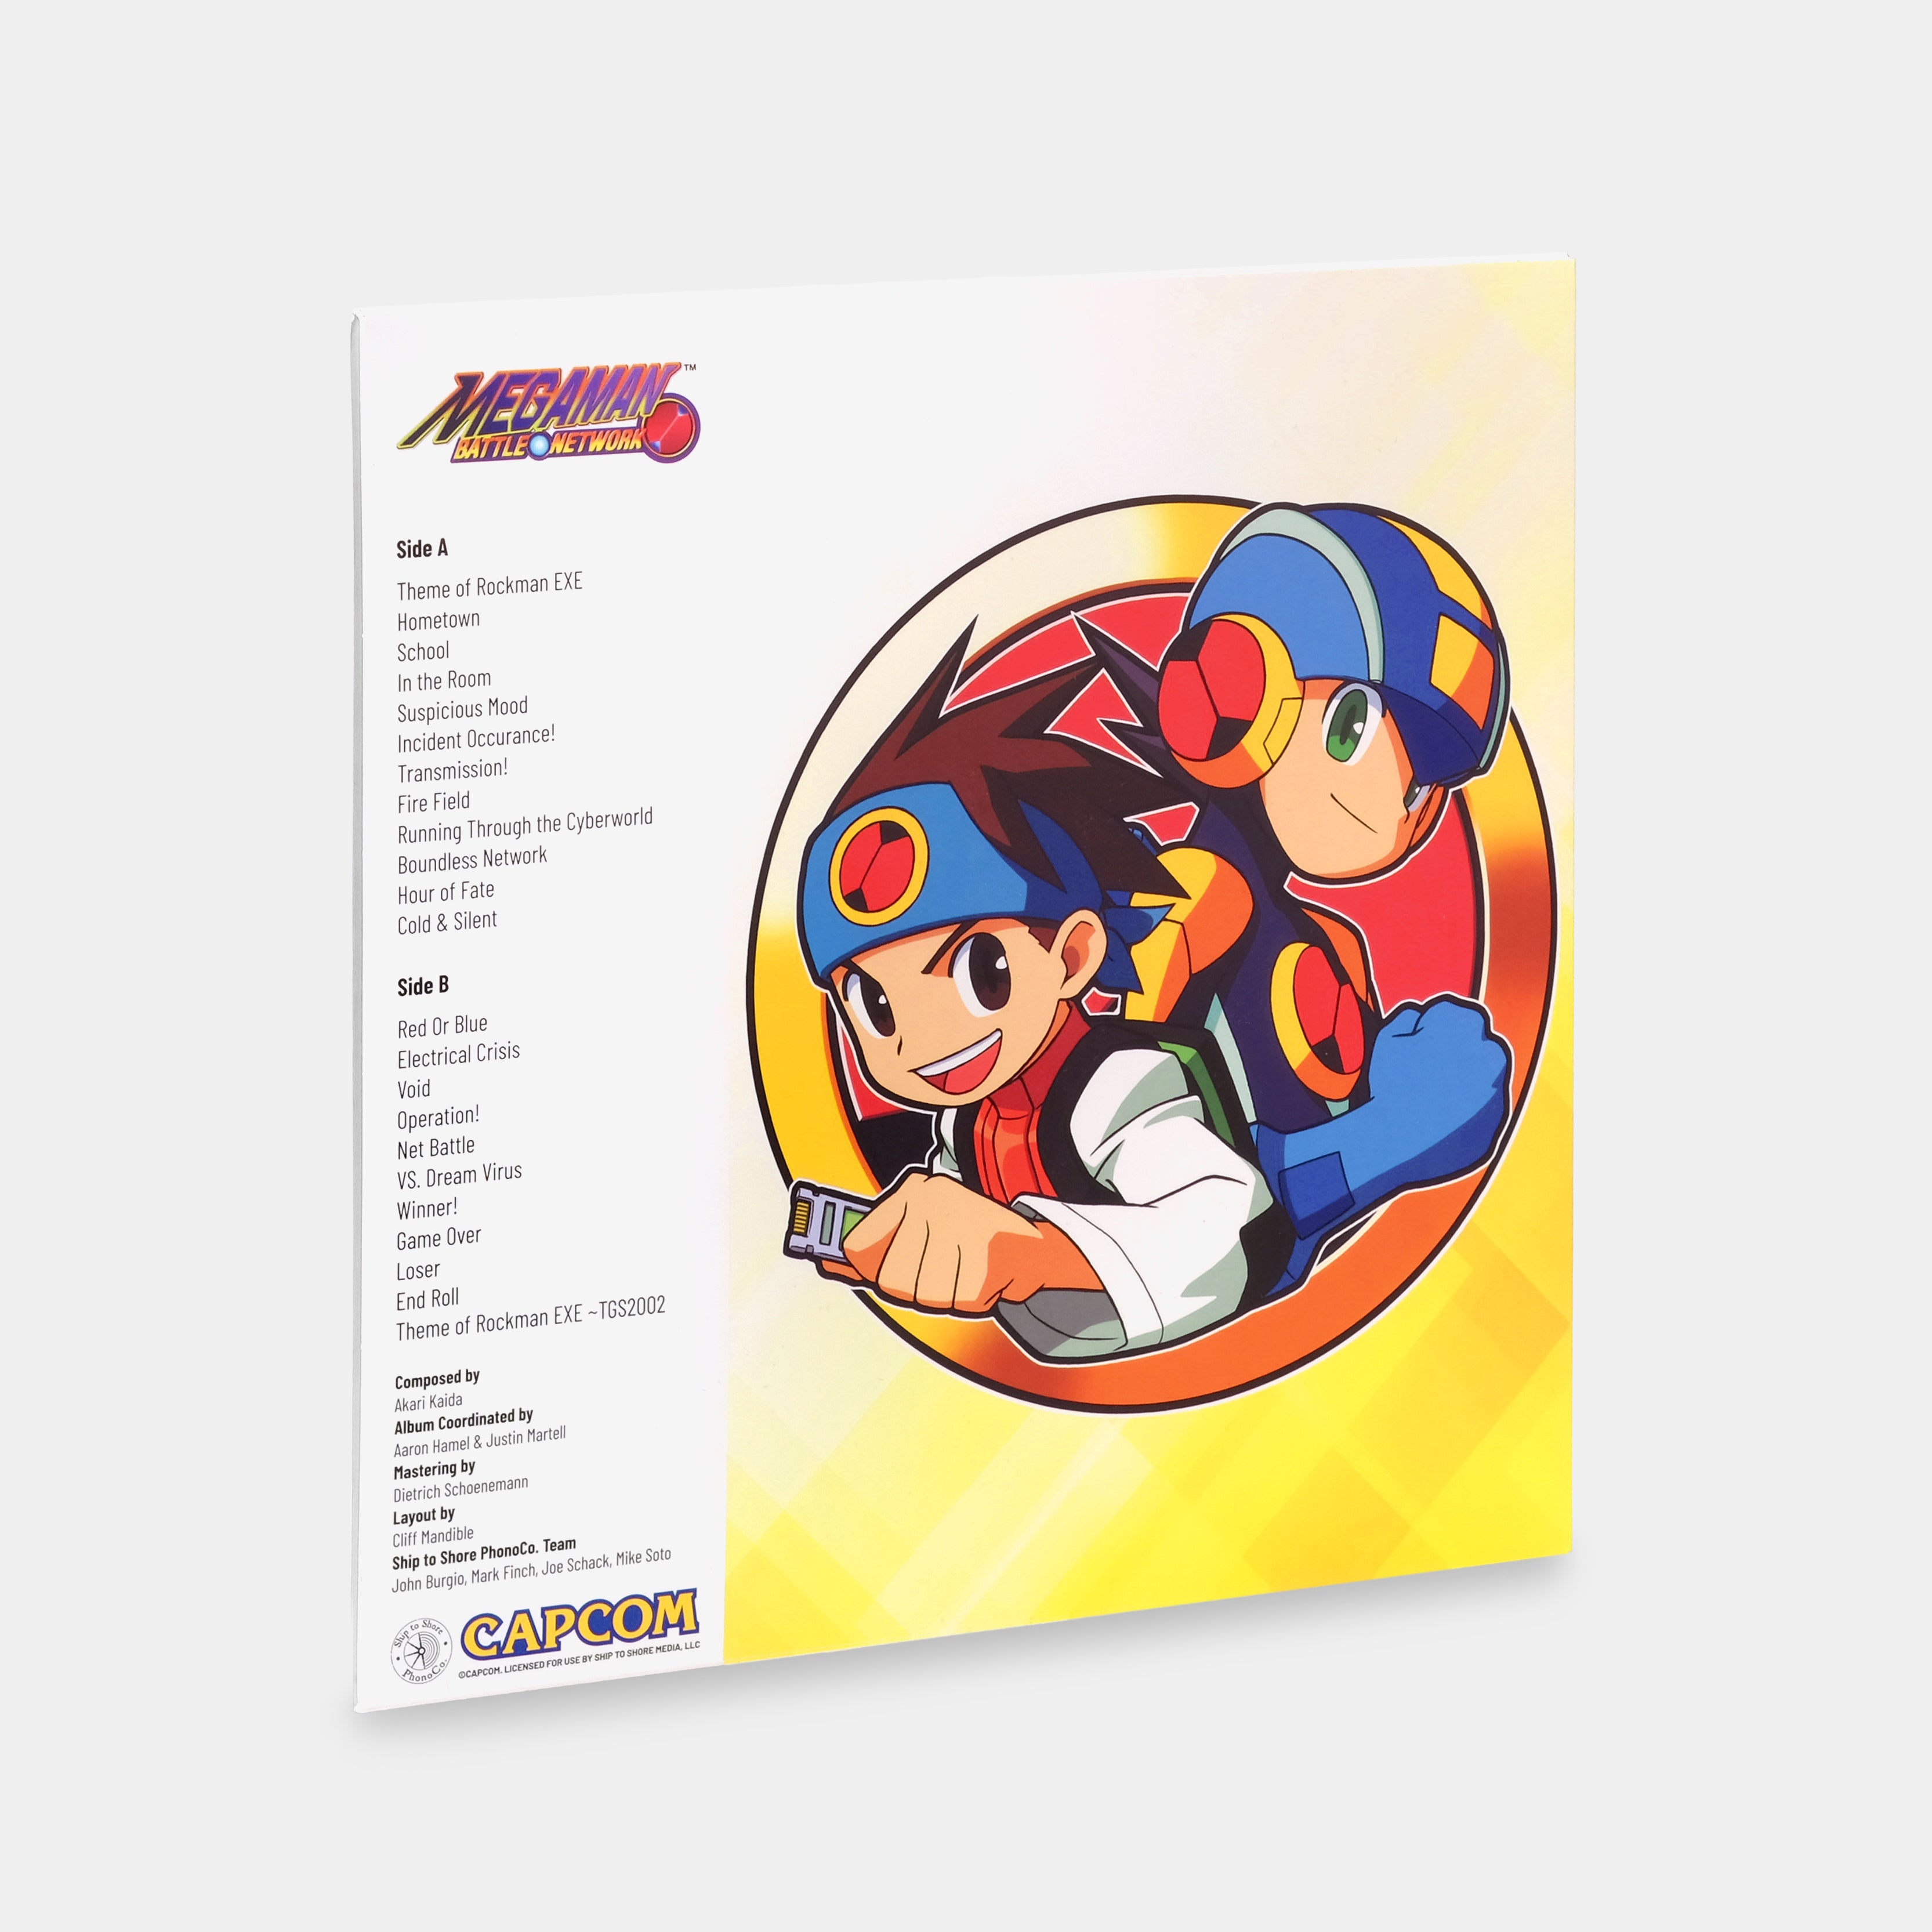 Akari Kaida - Mega Man Battle Network (Original Video Game Soundtrack) LP Blue and White Splatter Vinyl Record